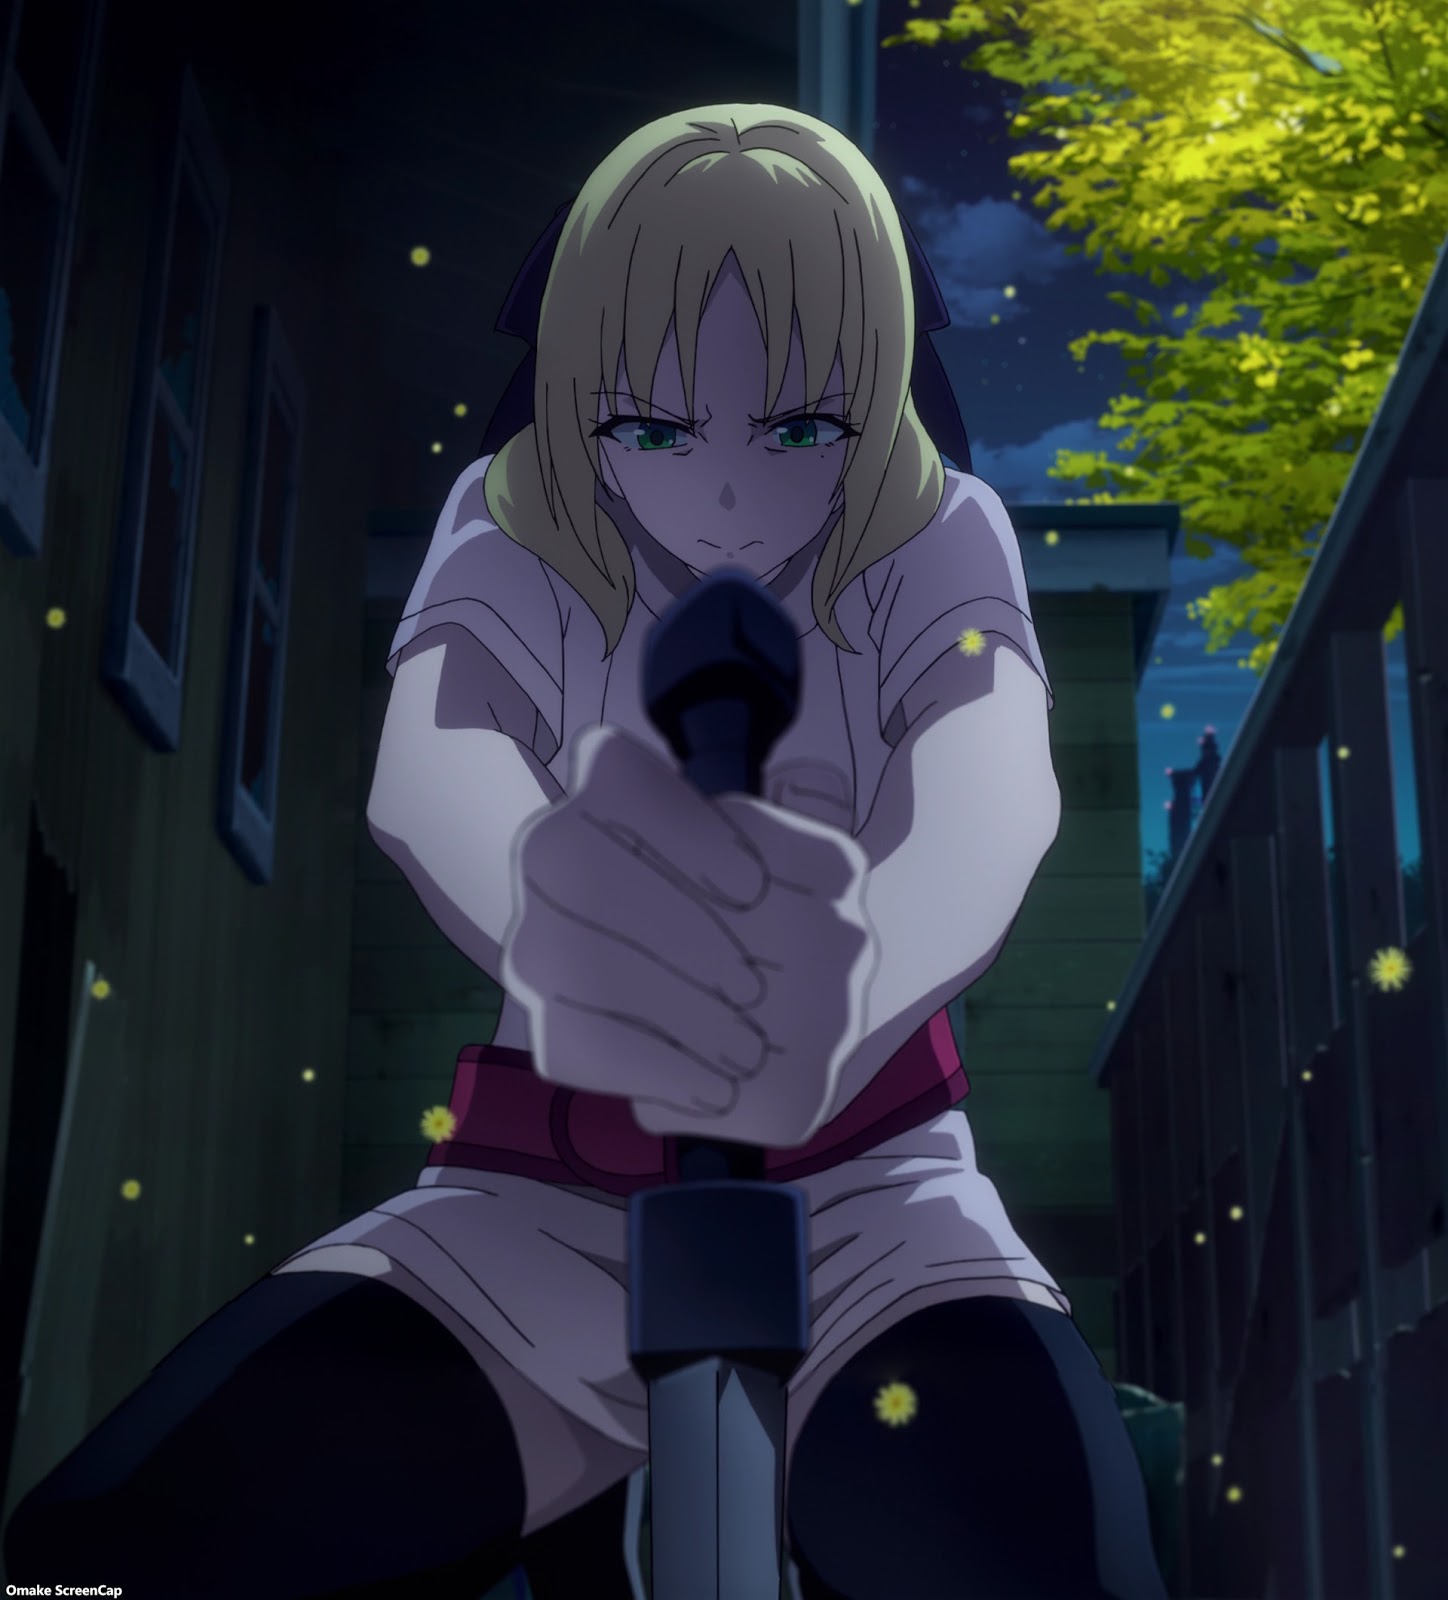 Joeschmo's Gears and Grounds: 10 Second Anime - Toaru Kagaku no Accelerator  - Episode 1